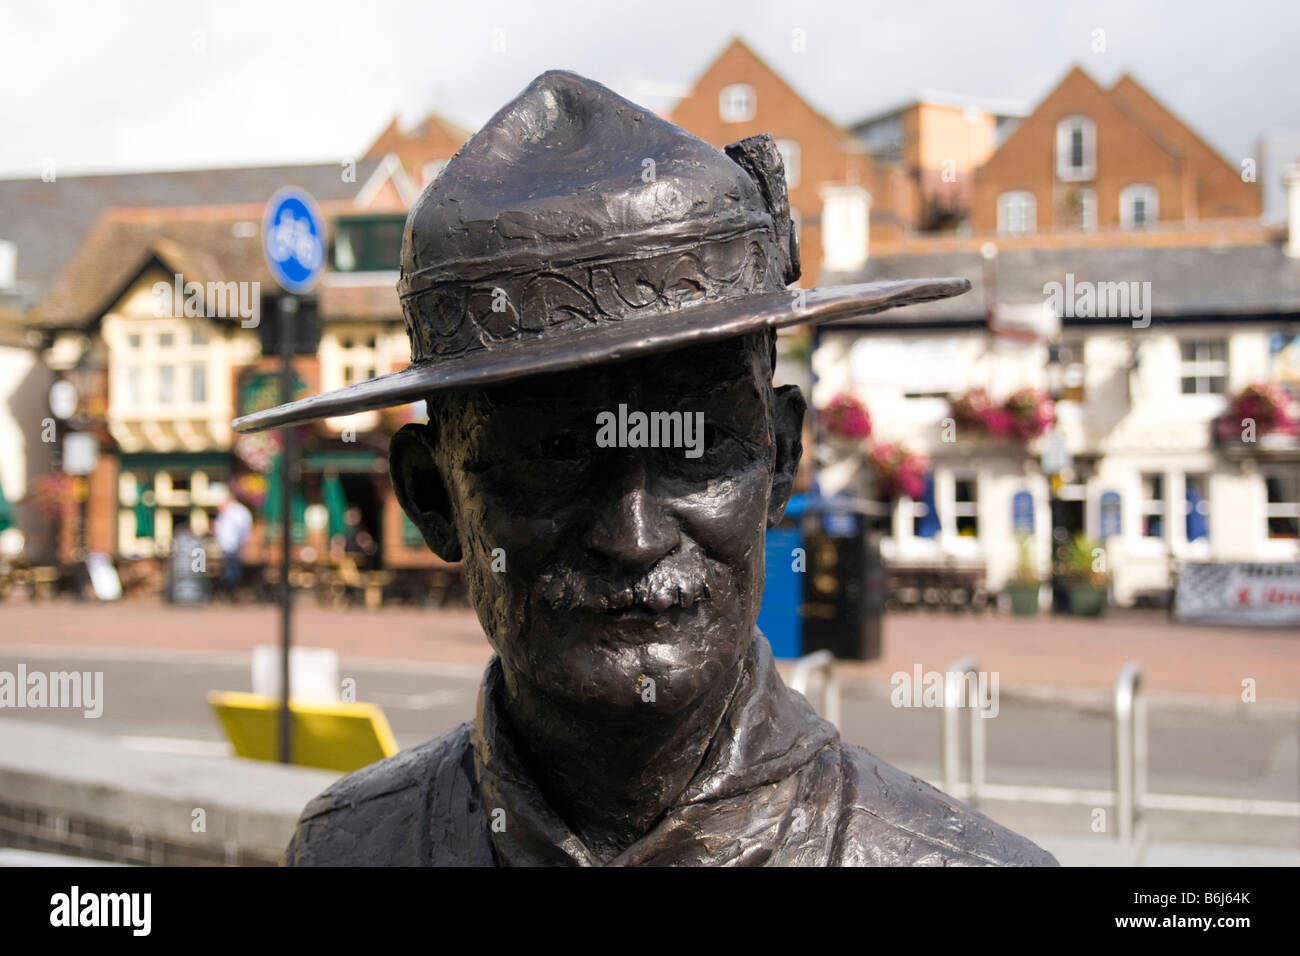 File:Perambur-Heritage-Walk-Lord-Baden-Powell-Statue-Founder